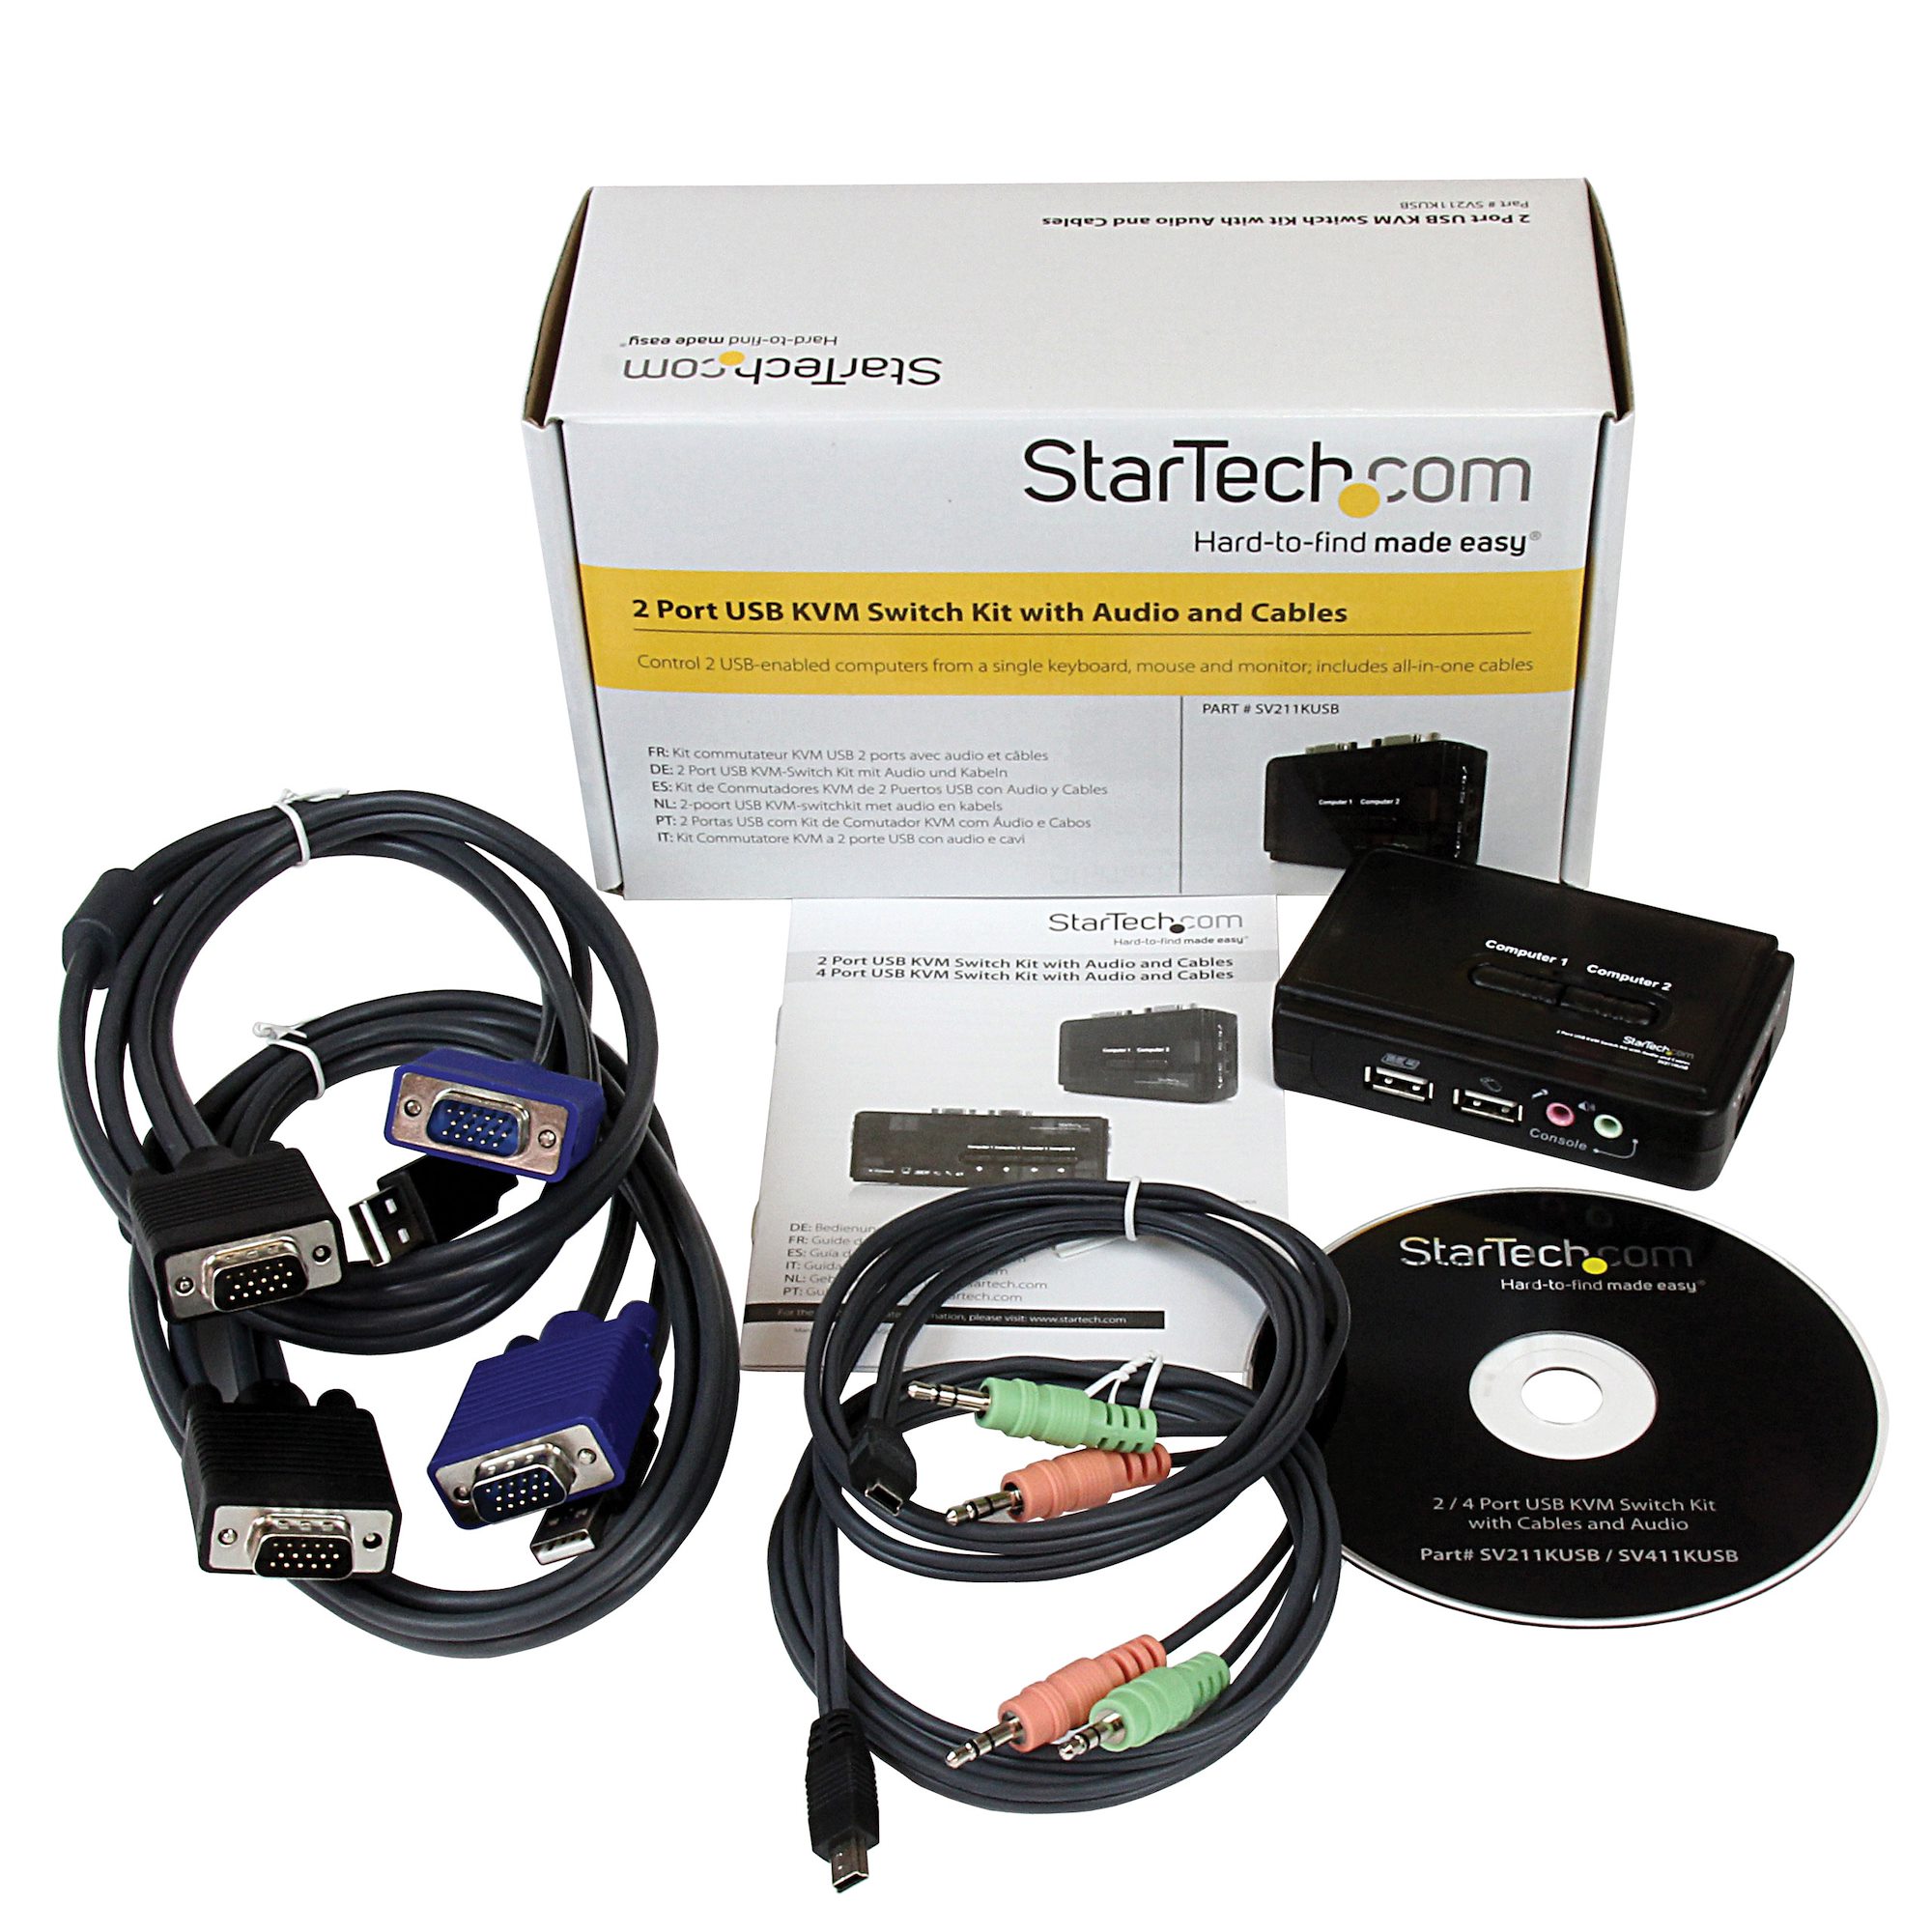 StarTech.com FTRST2 Ergonomic Rocking Foot Rest with Cable Management